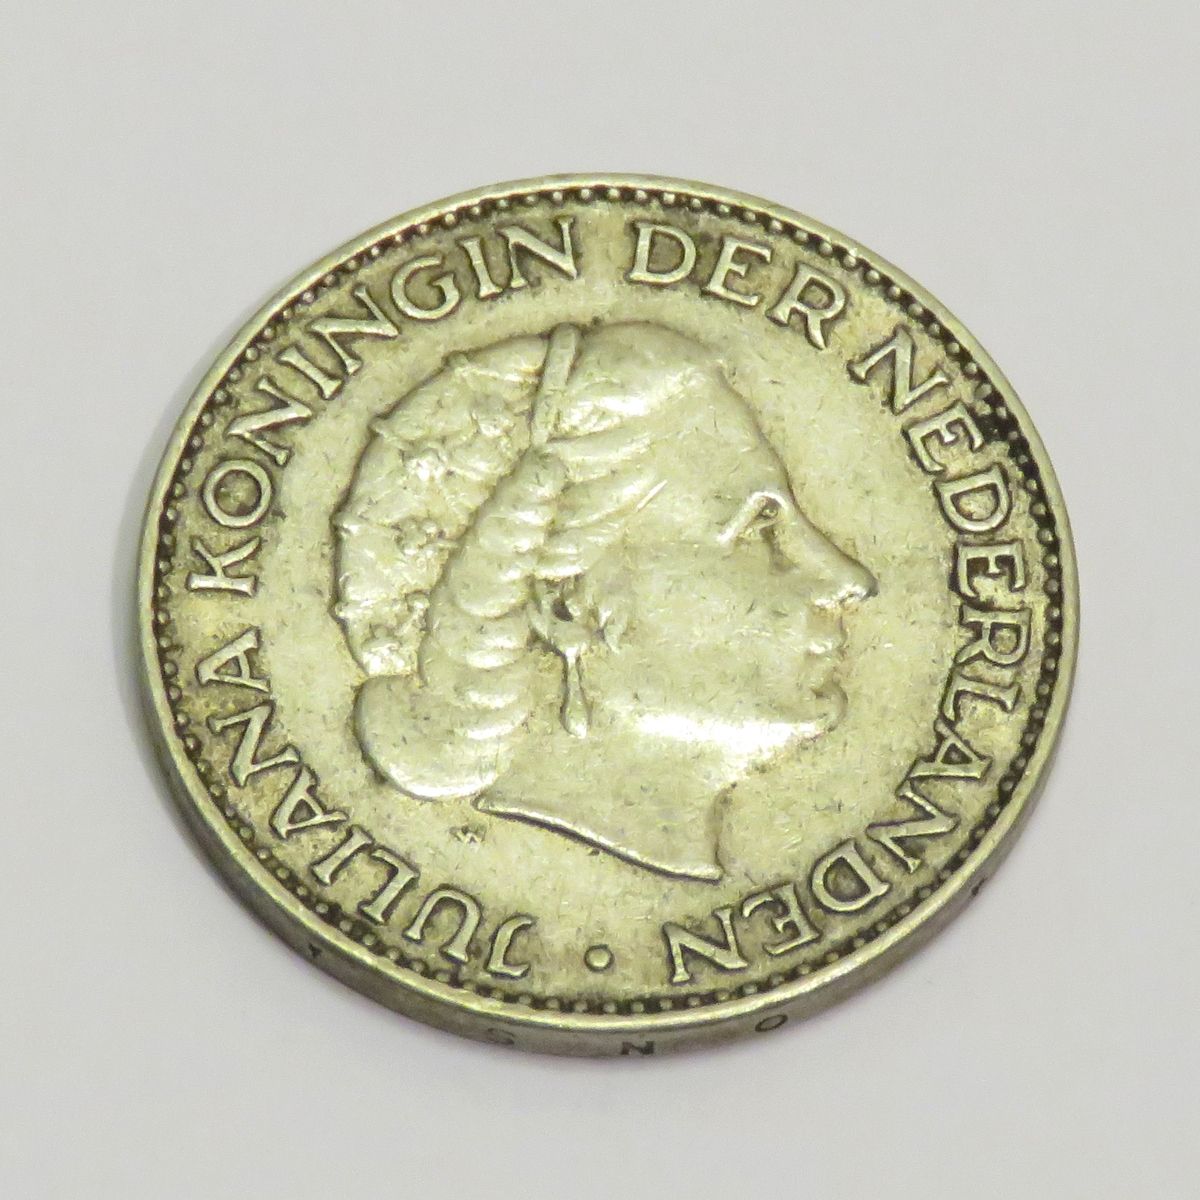 Null Moneta d'argento da "1 Giuliana d'oro" (Paesi Bassi) datata 1958. Peso: 6g5&hellip;